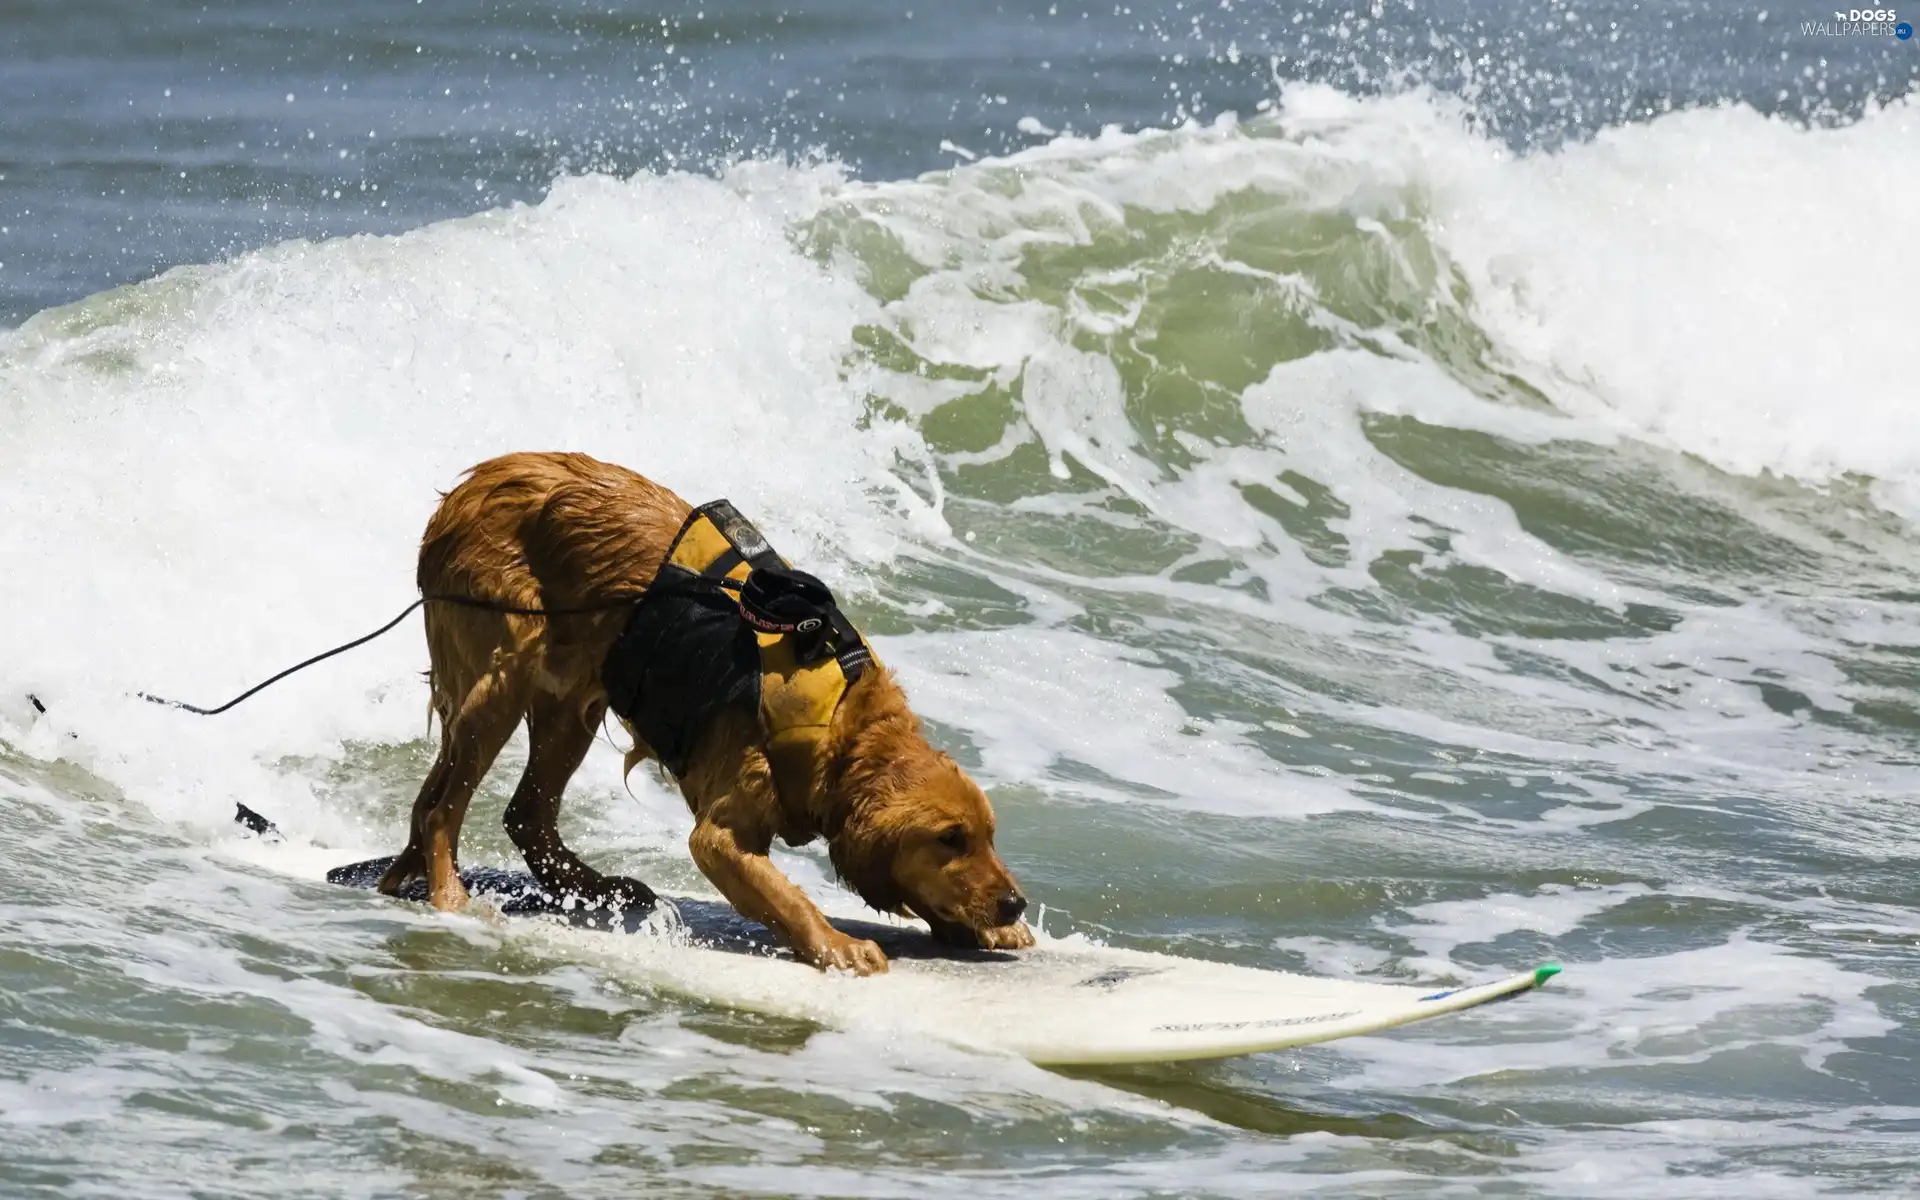 board, Waves, dog, surf, rescuer